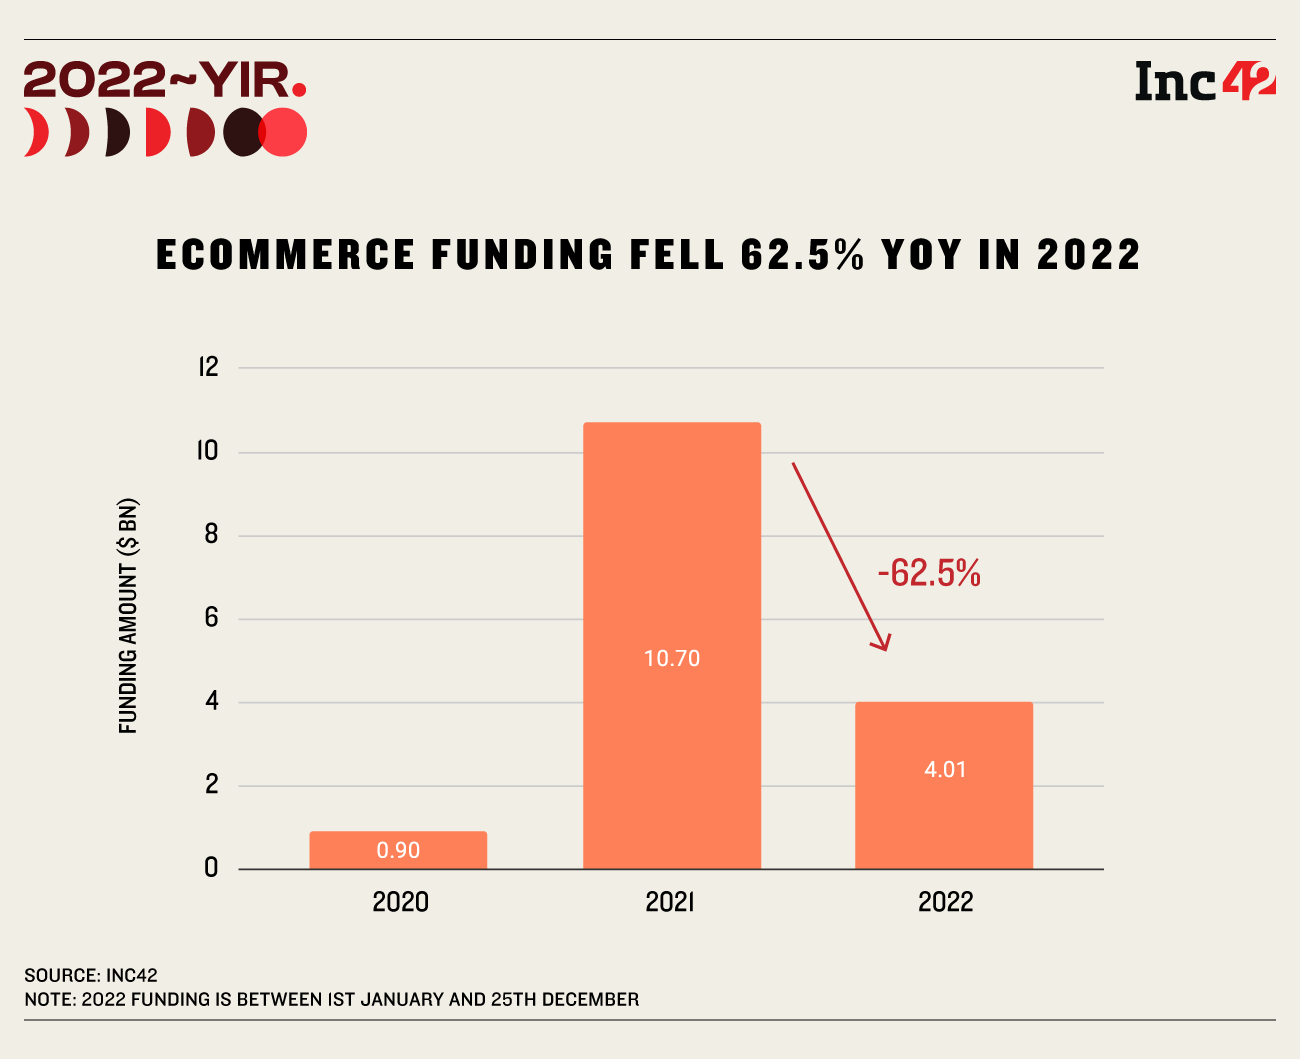 Ecommerce funding fell in 2022